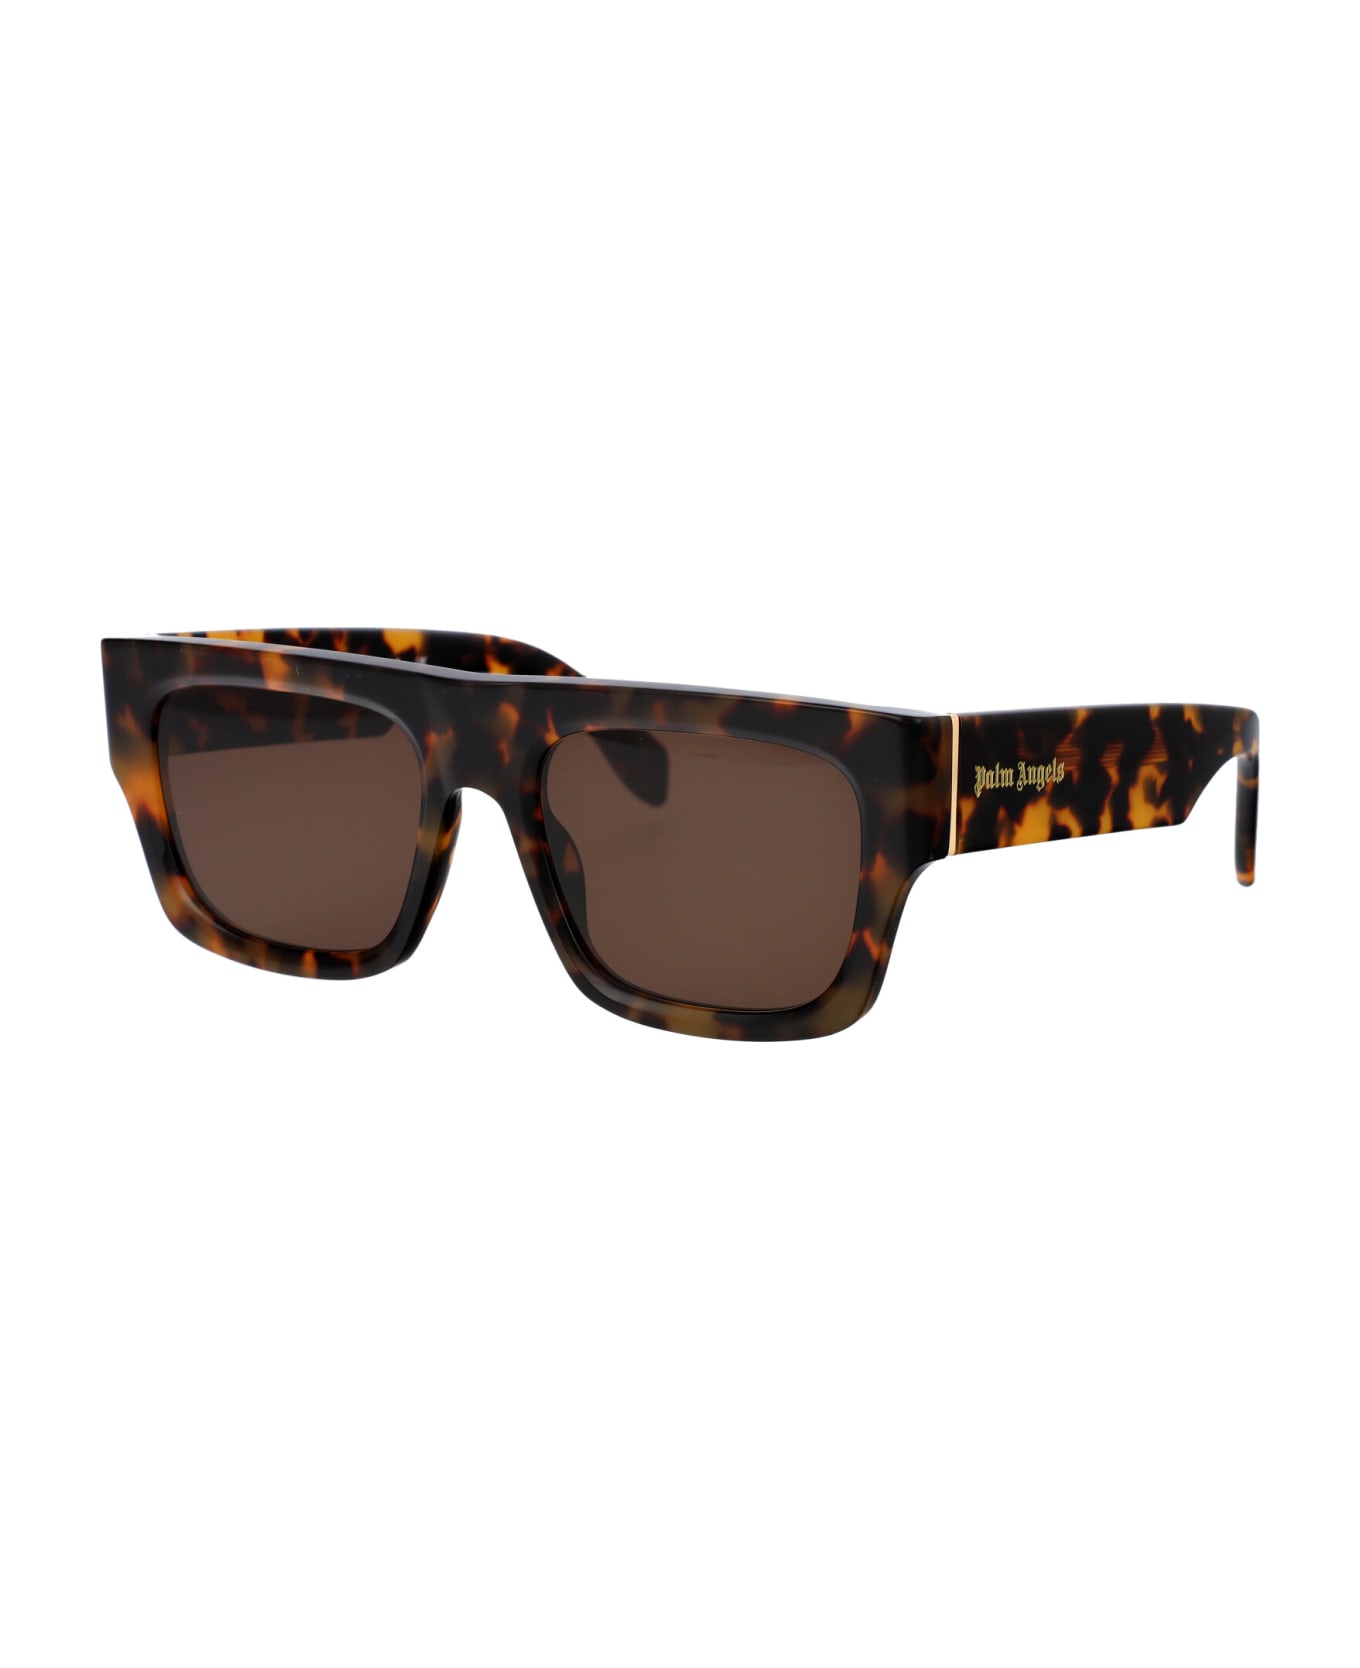 Palm Angels Pixley Sunglasses - 6064 HAVANA サングラス